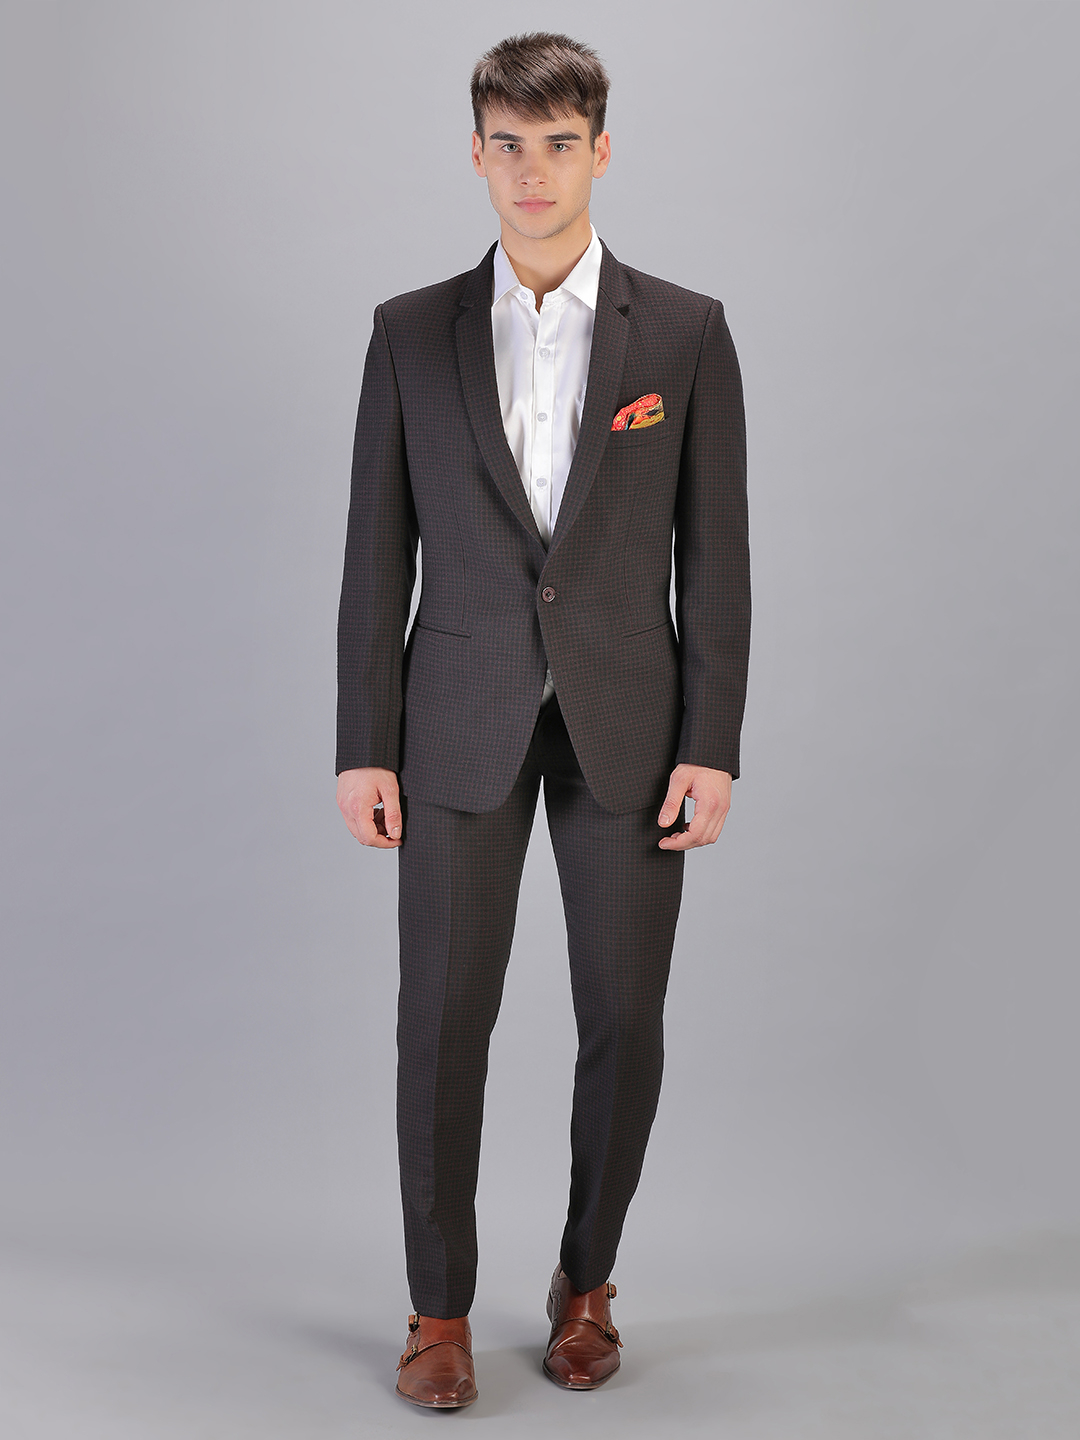 brown-checks1-full-suit